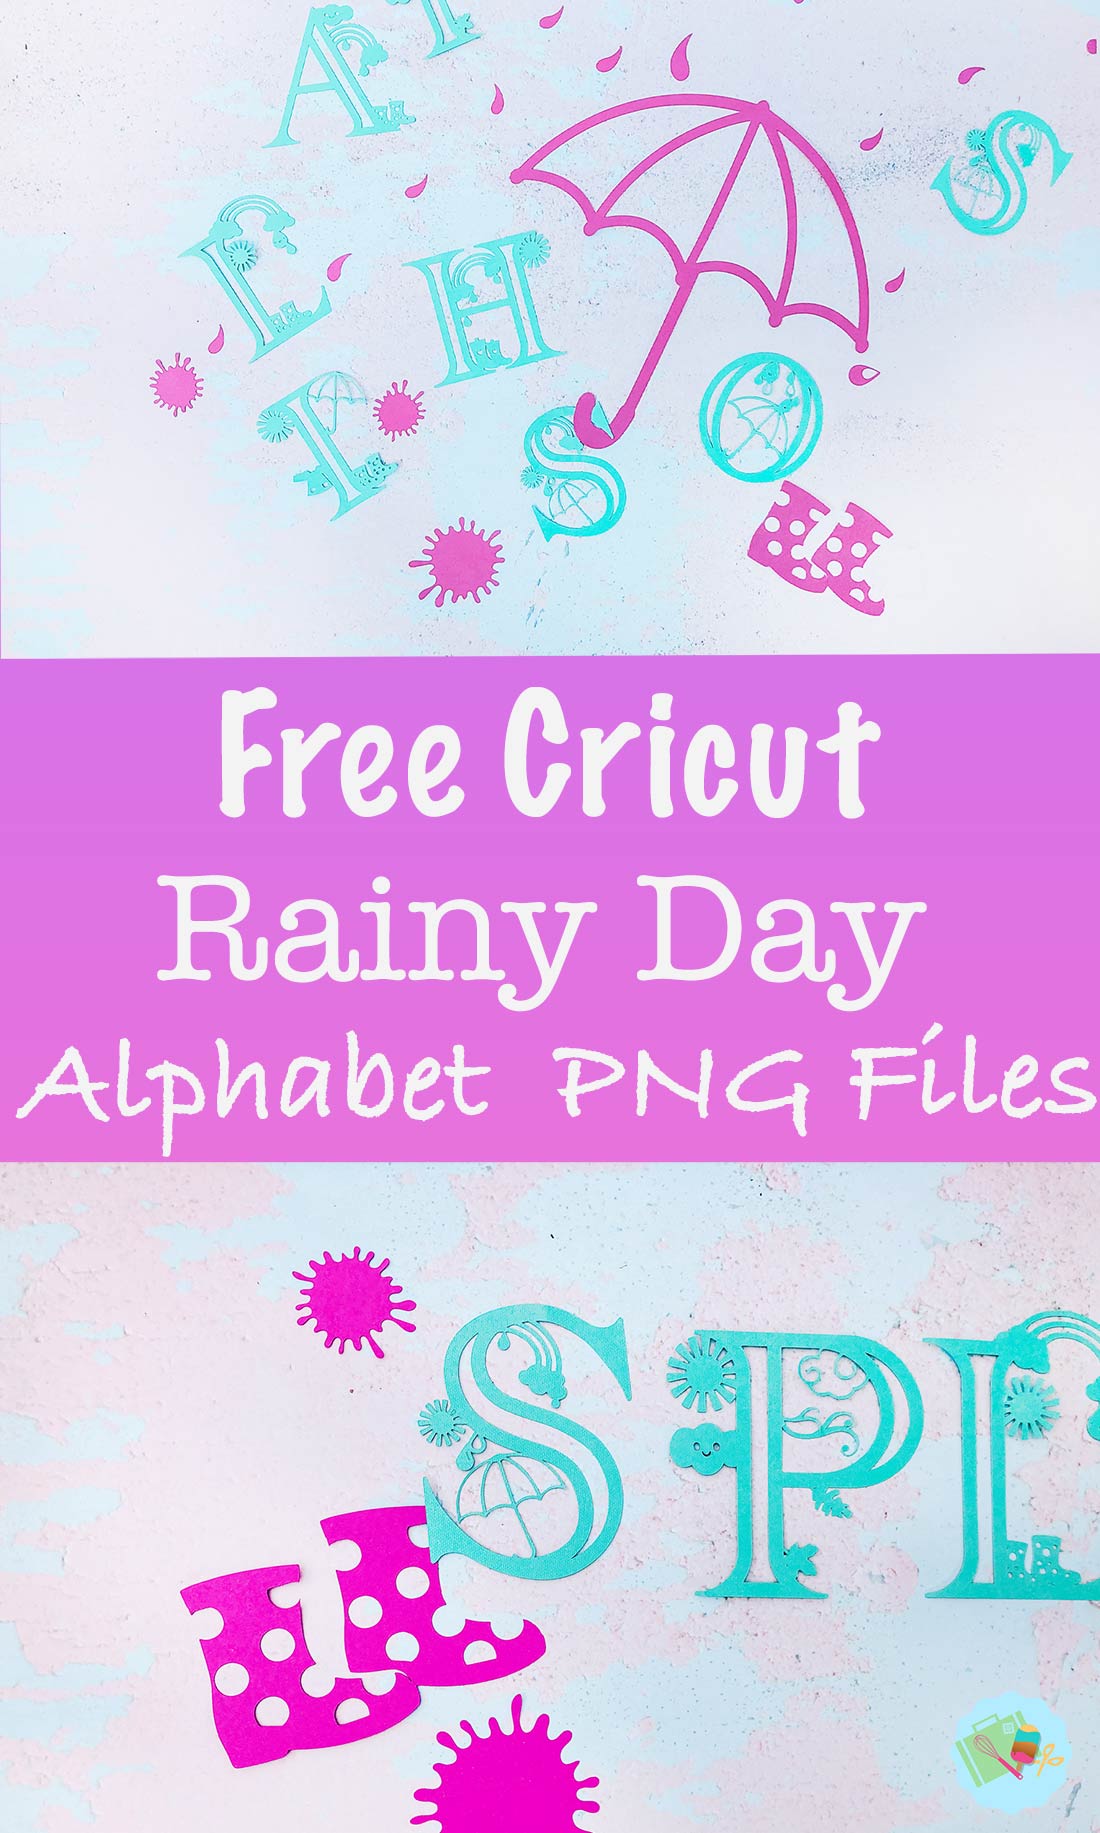 Free Cricut Rainy Day Alphabet PNG Files